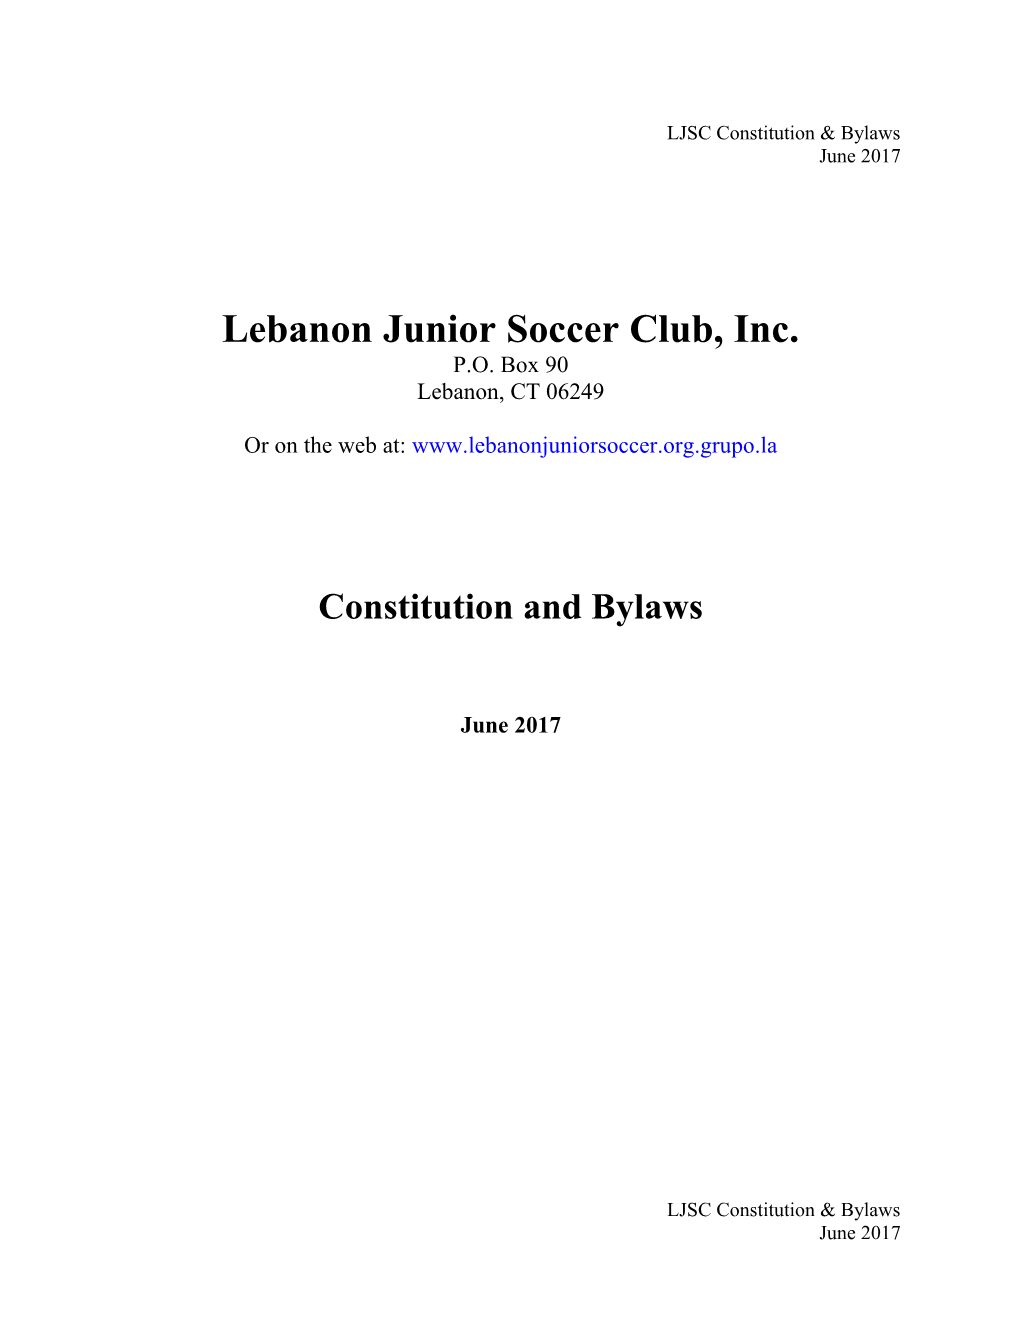 Lebanon Junior Soccer Club, Inc